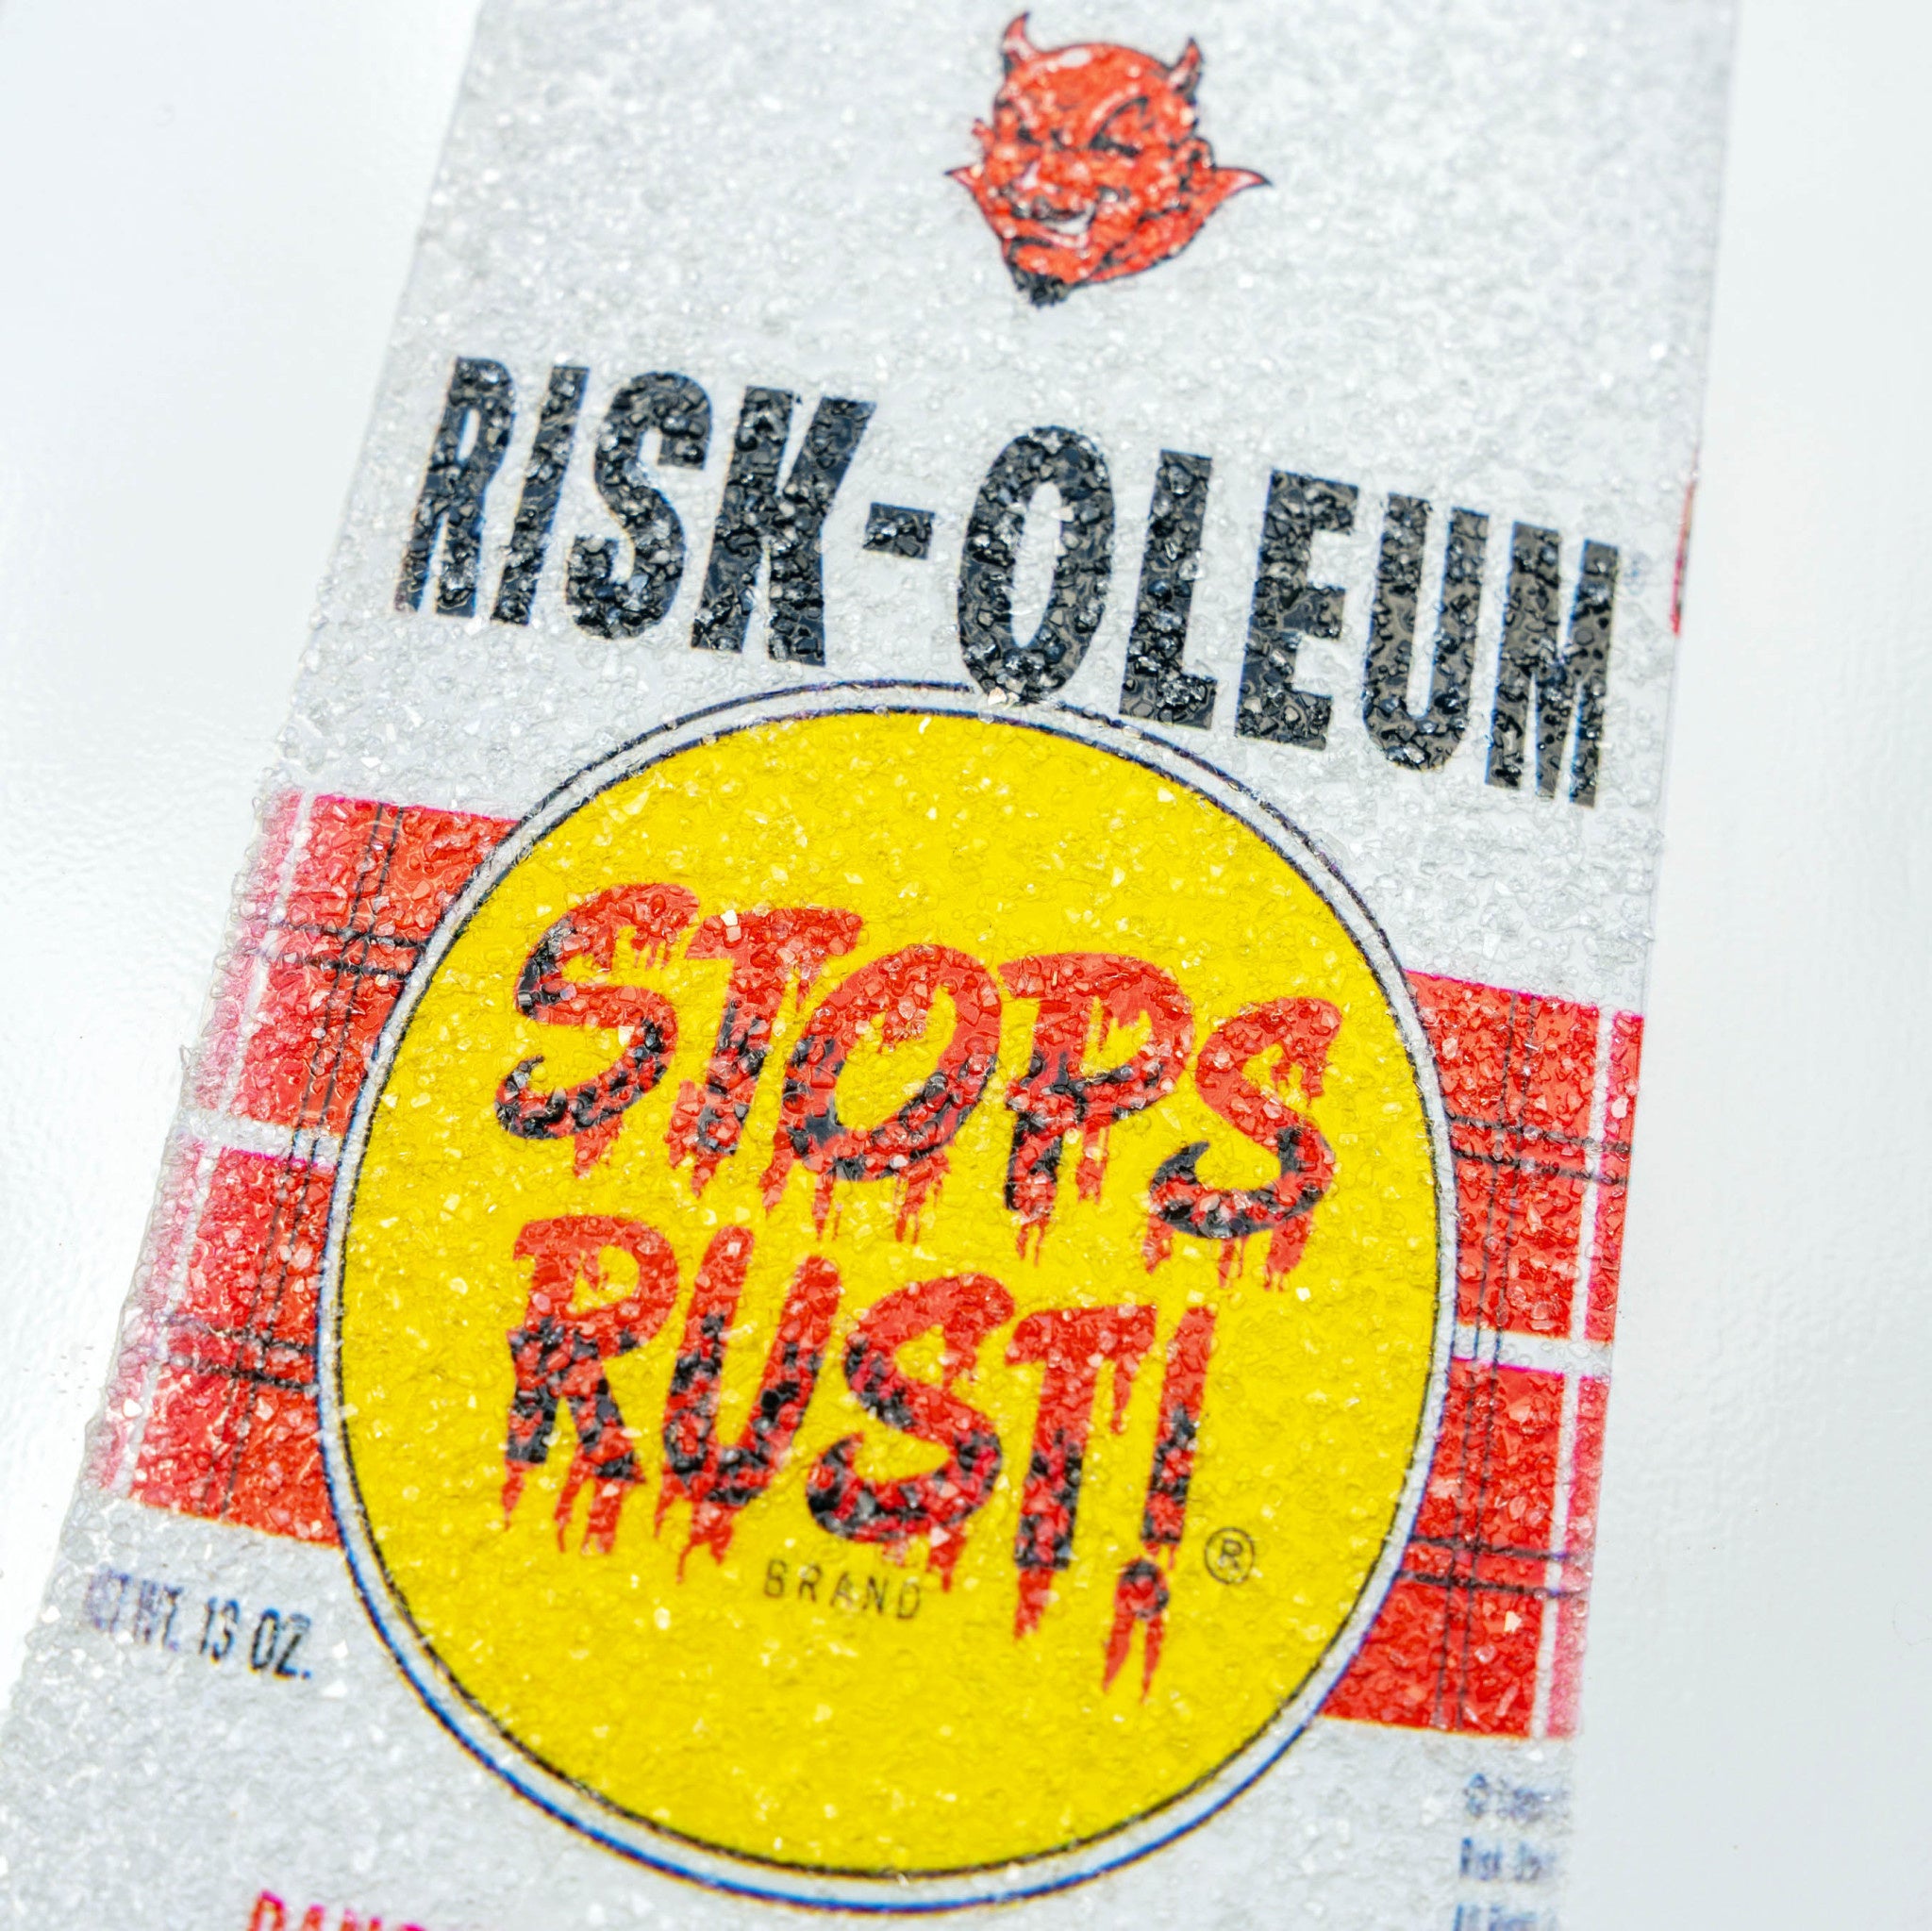 RISK Diamond Dust Riskoleum Skate Deck - Wynwood Walls Shop